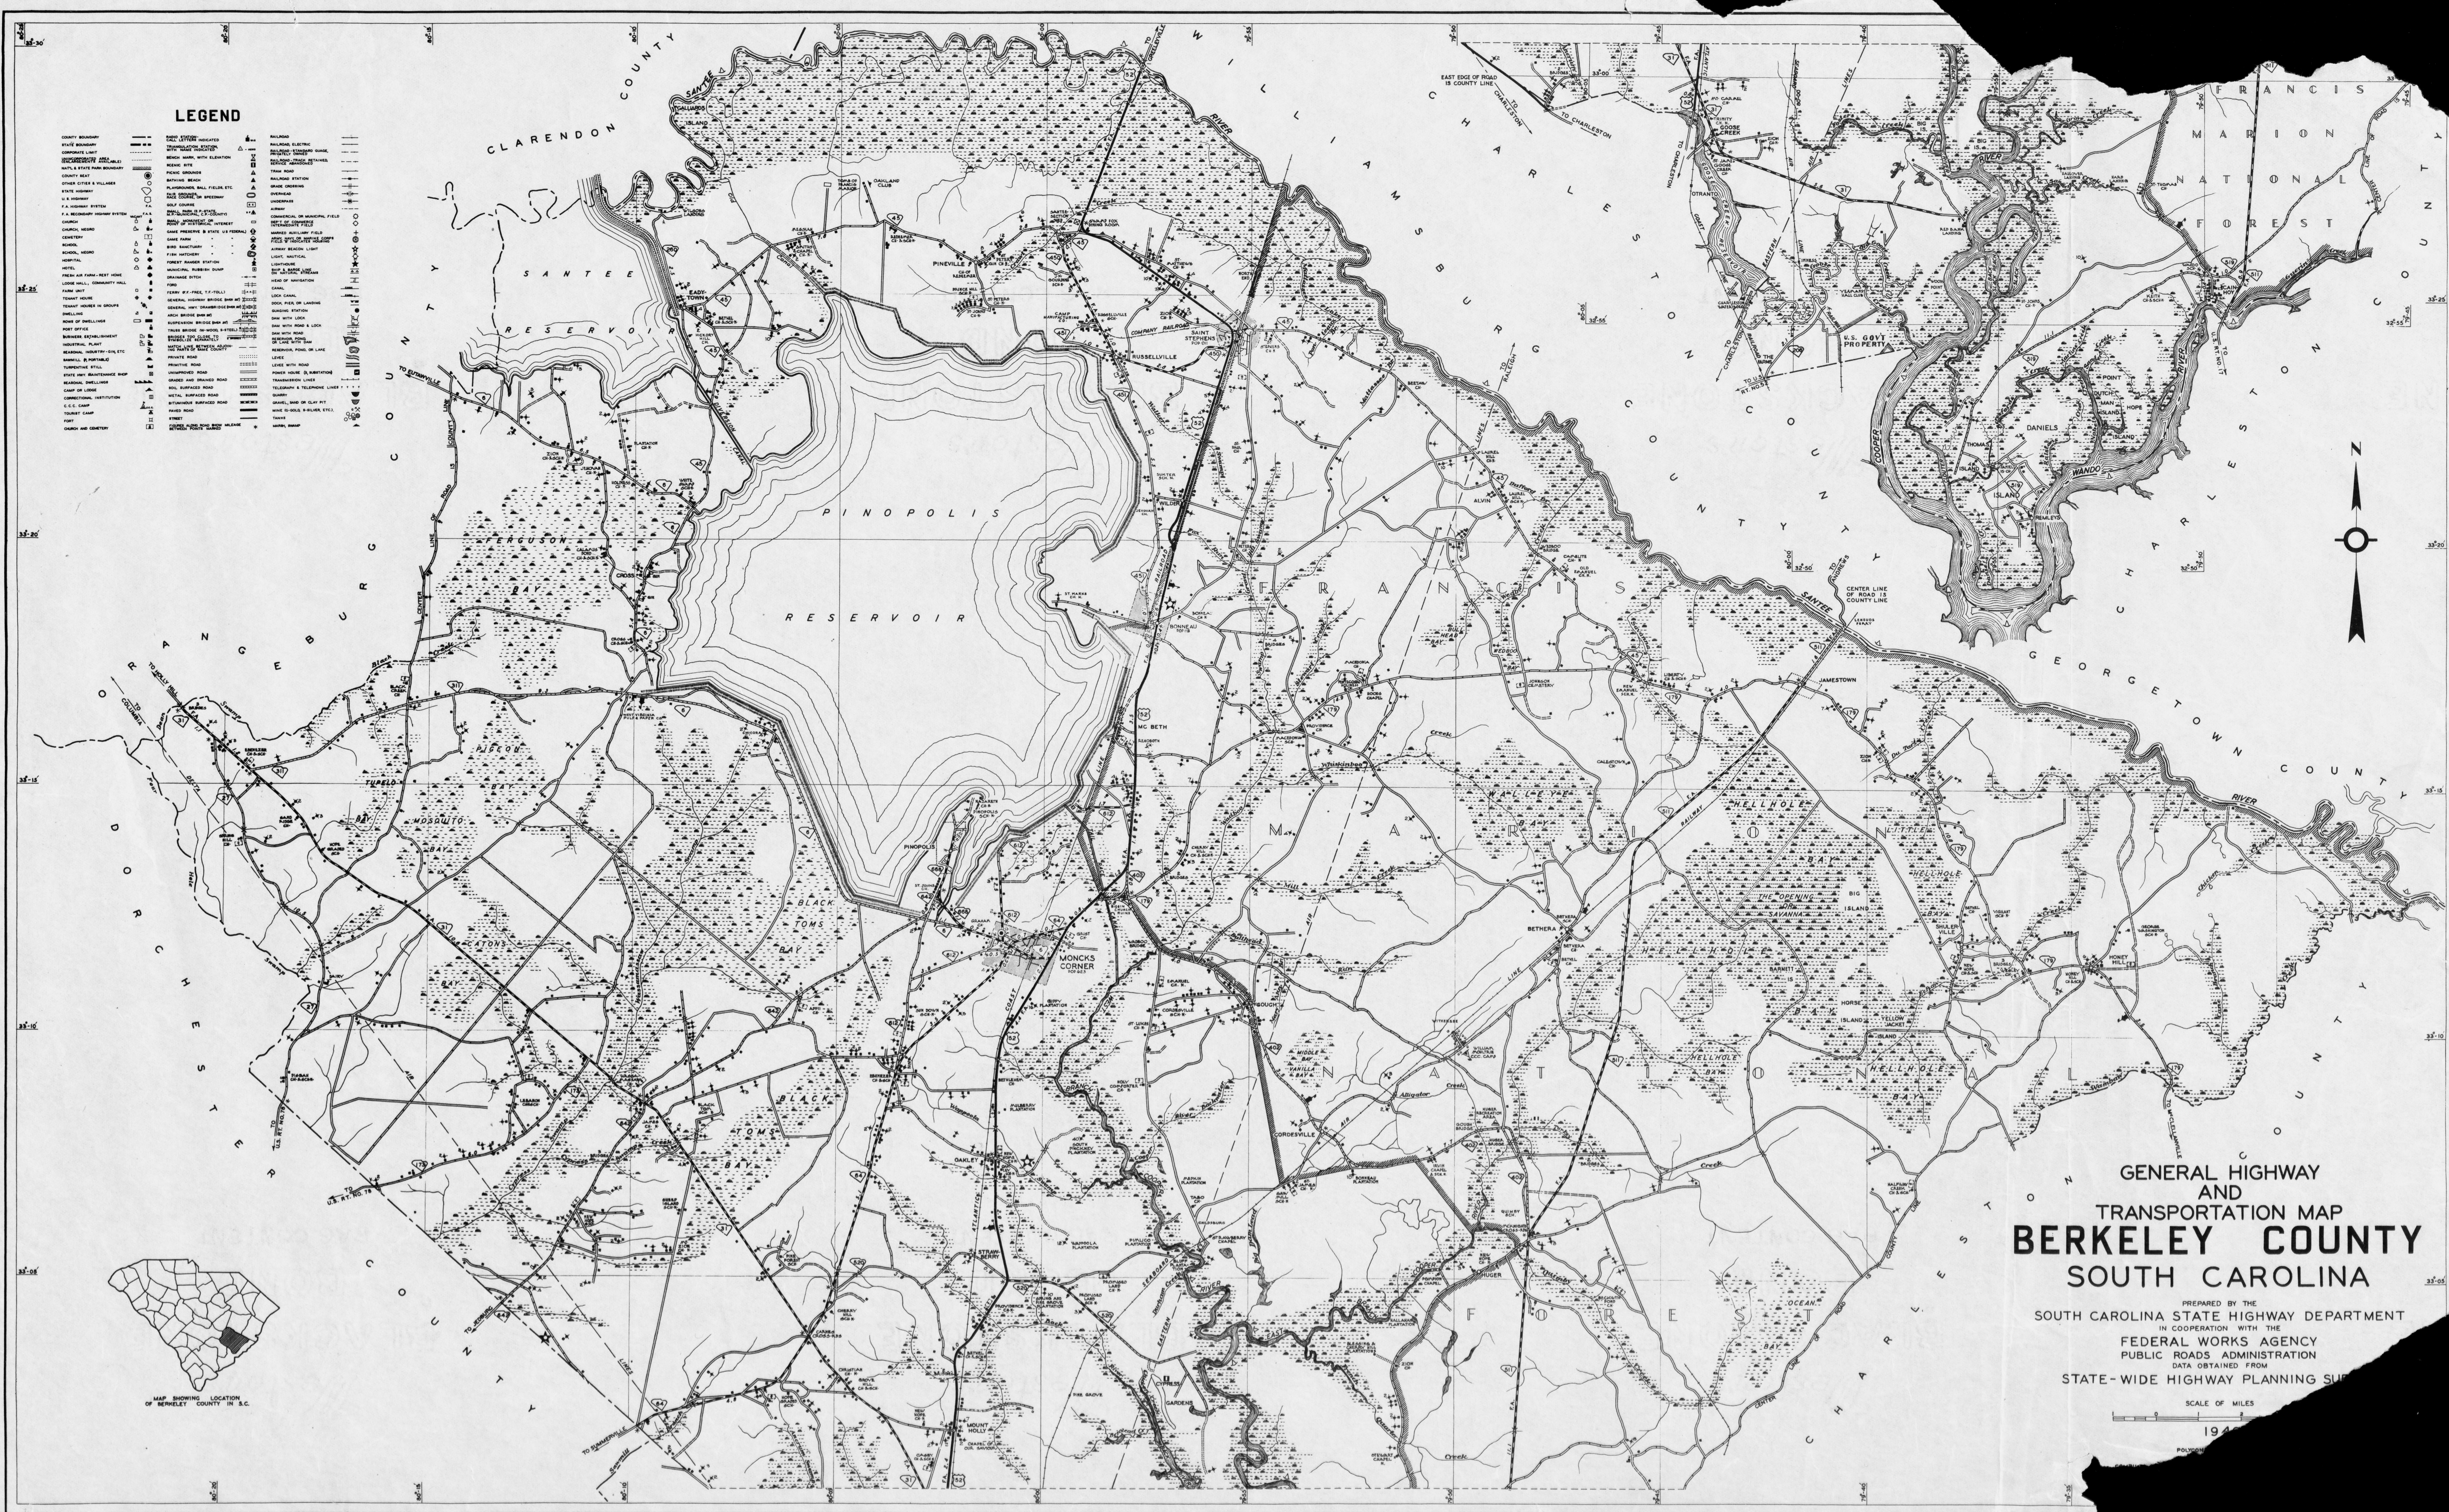 ENLARGEABLE BERKELEY CO MAP - 1940s